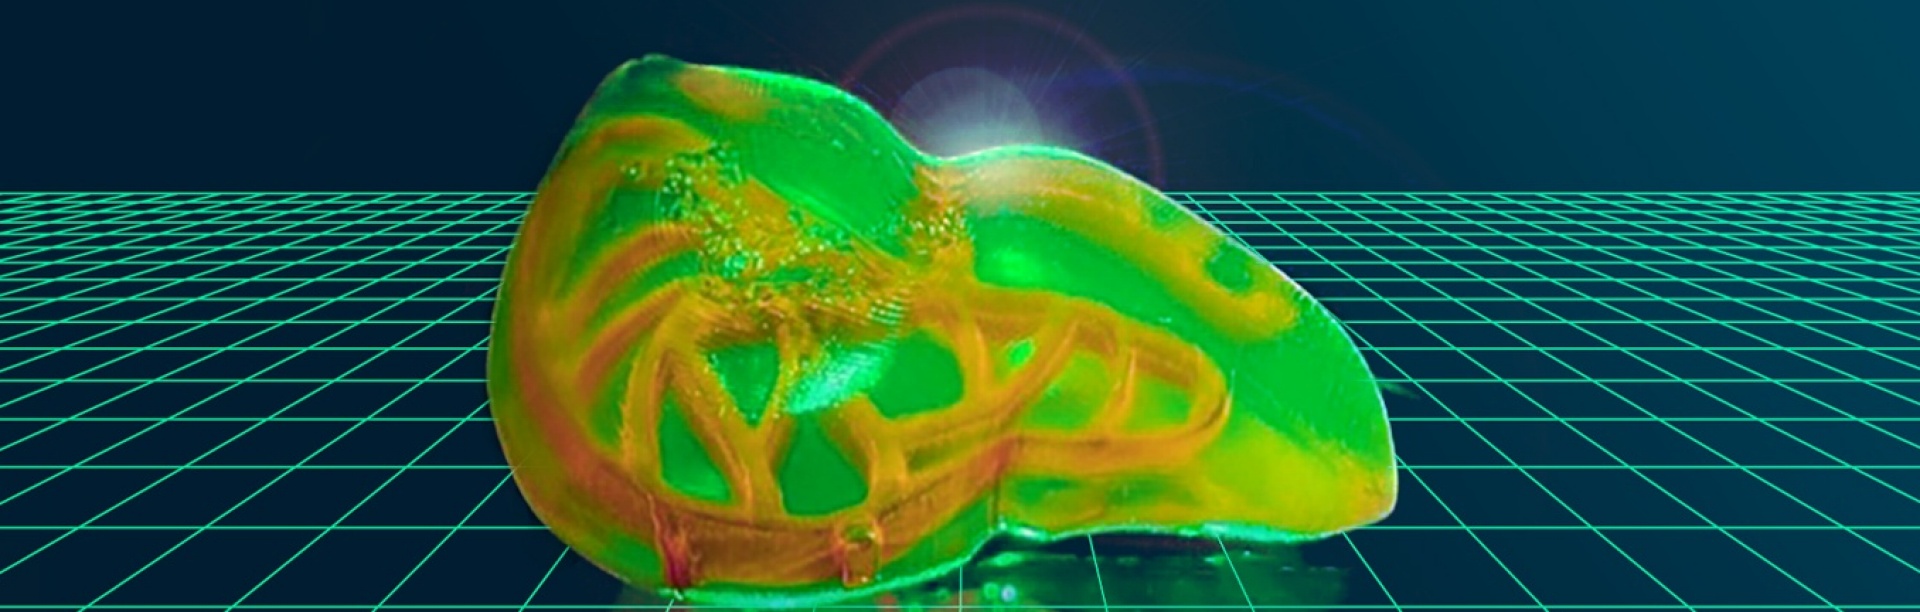 3D printed human liver rendering. 